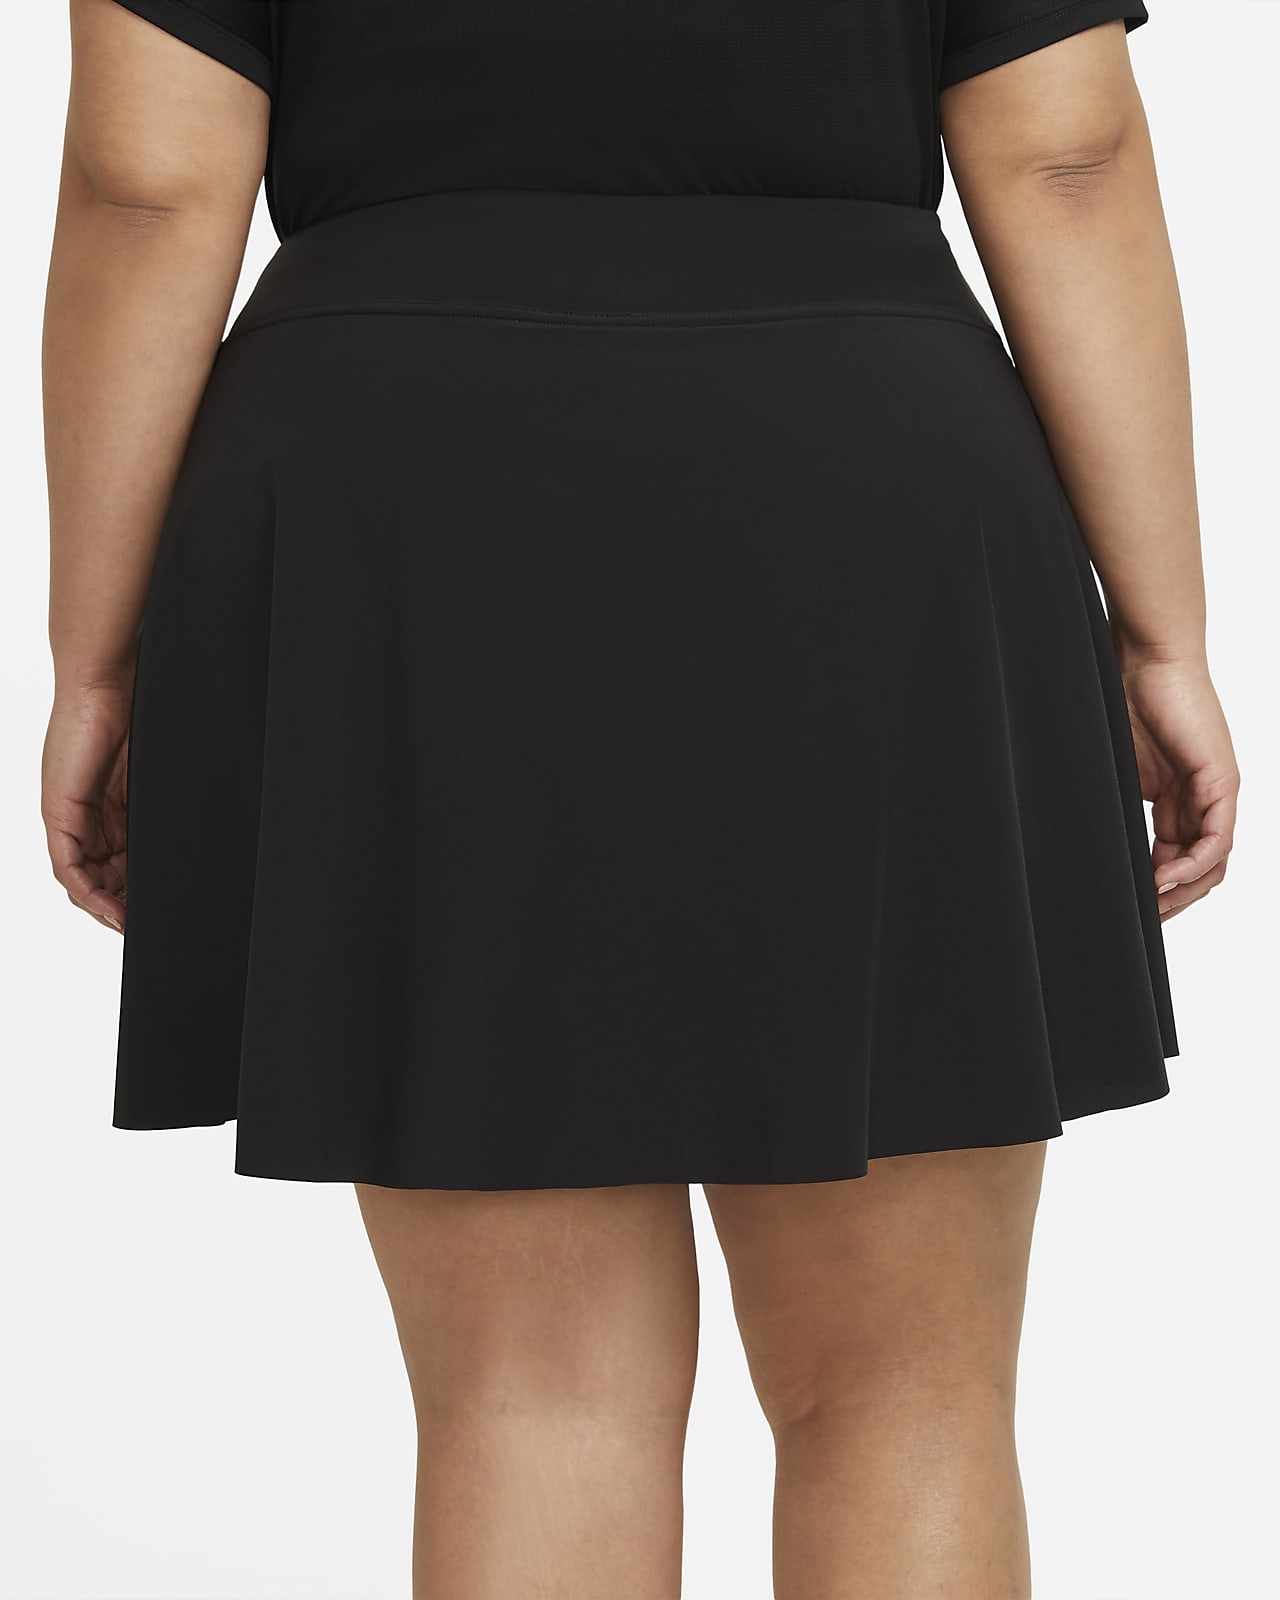 Nike Club Skirt Women's Regular Tennis Skirt (Plus Size).